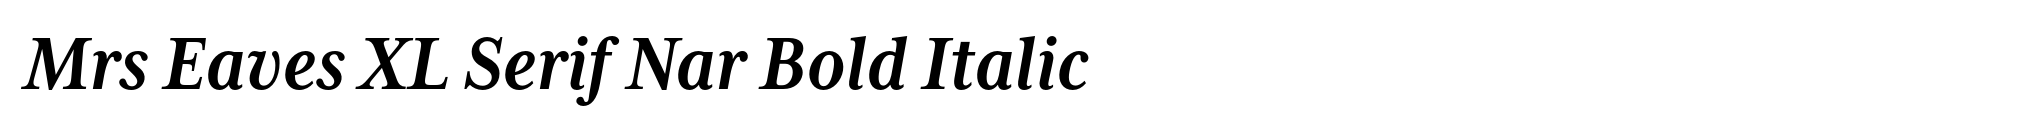 Mrs Eaves XL Serif Nar Bold Italic image